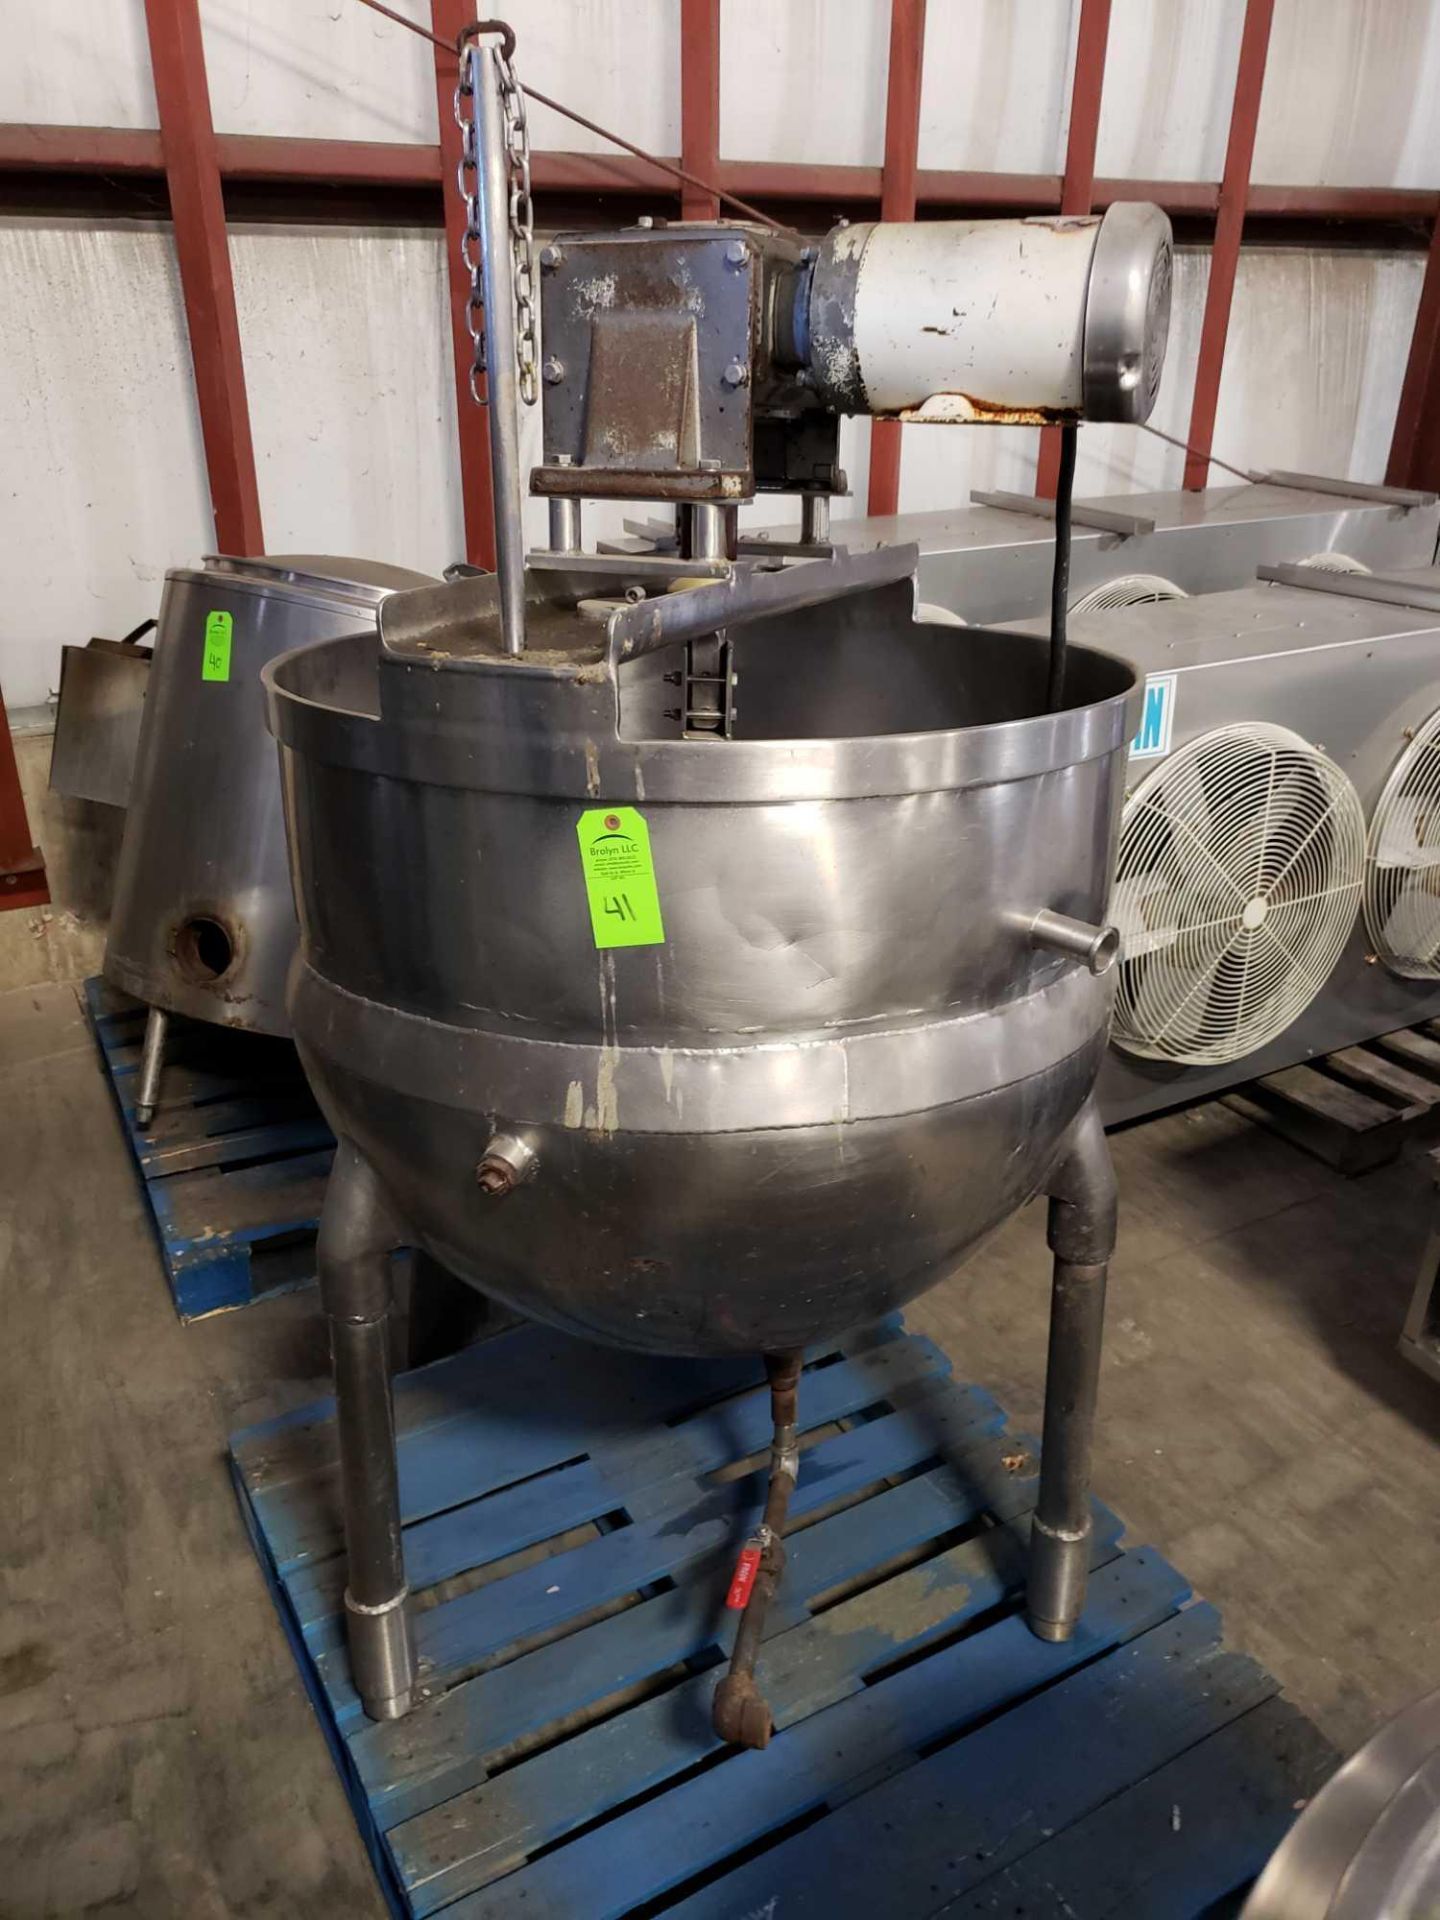 Groen 1X stainless steel mixing kettle. Dimensions of kettle 40" diameter x 30" deep interior.